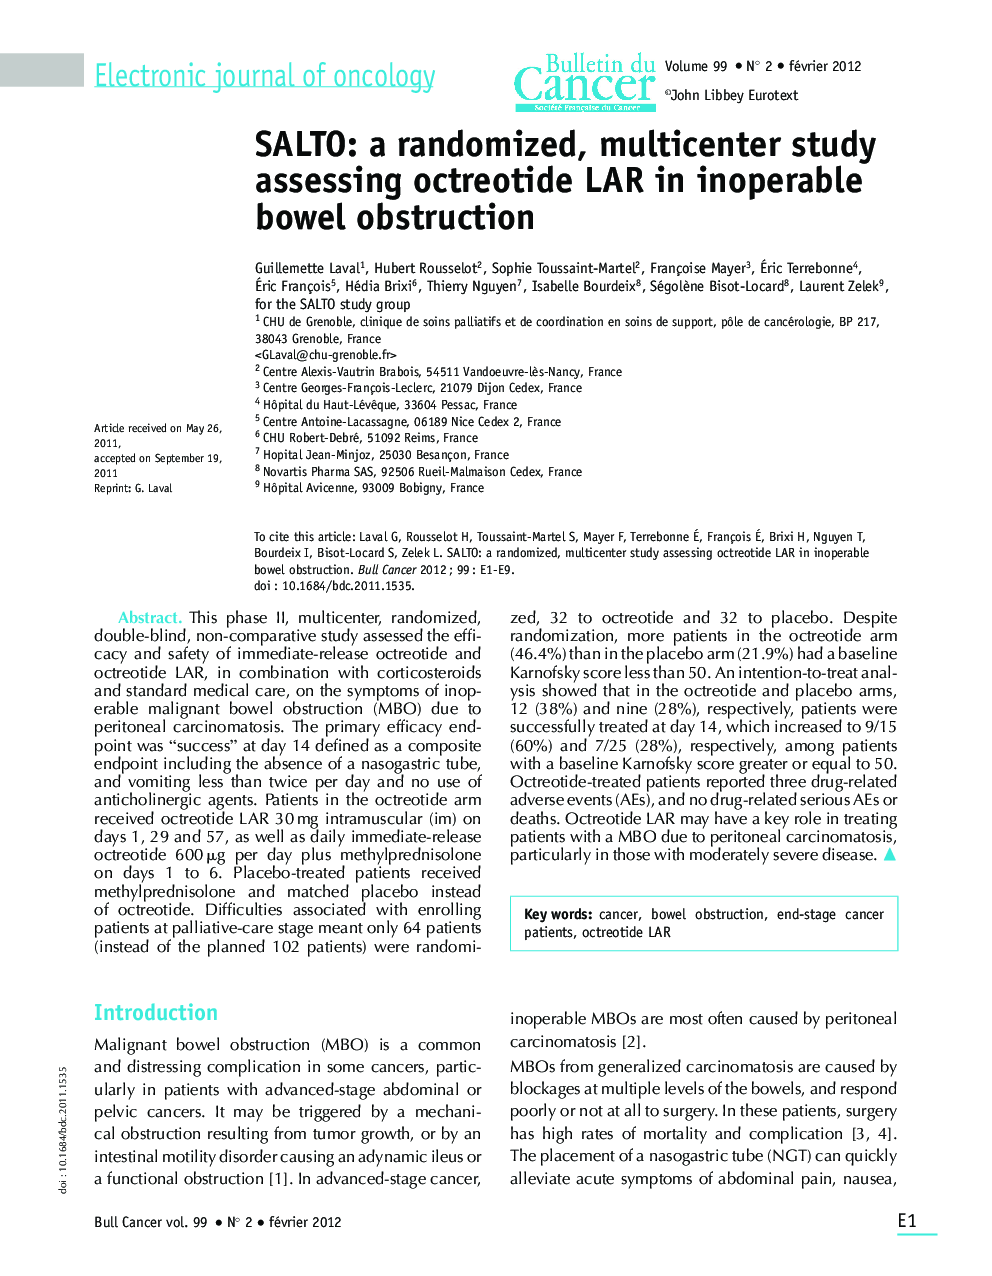 SALTO: a randomized, multicenter study assessing octreotide LAR in inoperable bowel obstruction